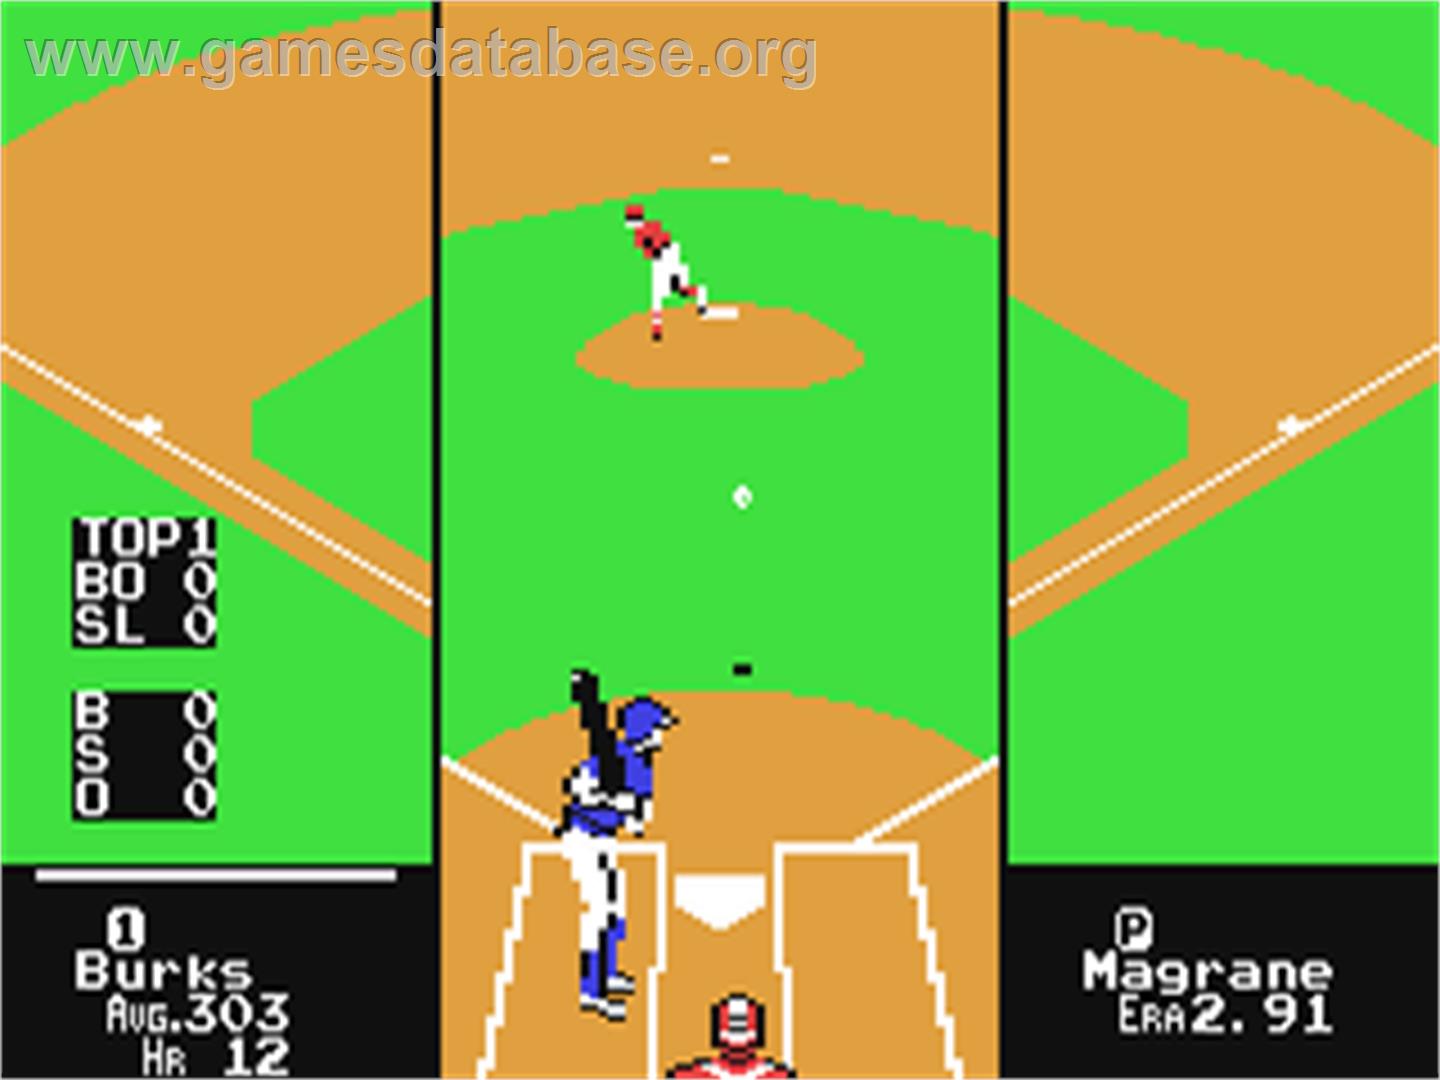 RBI 2 Baseball - Commodore 64 - Artwork - In Game